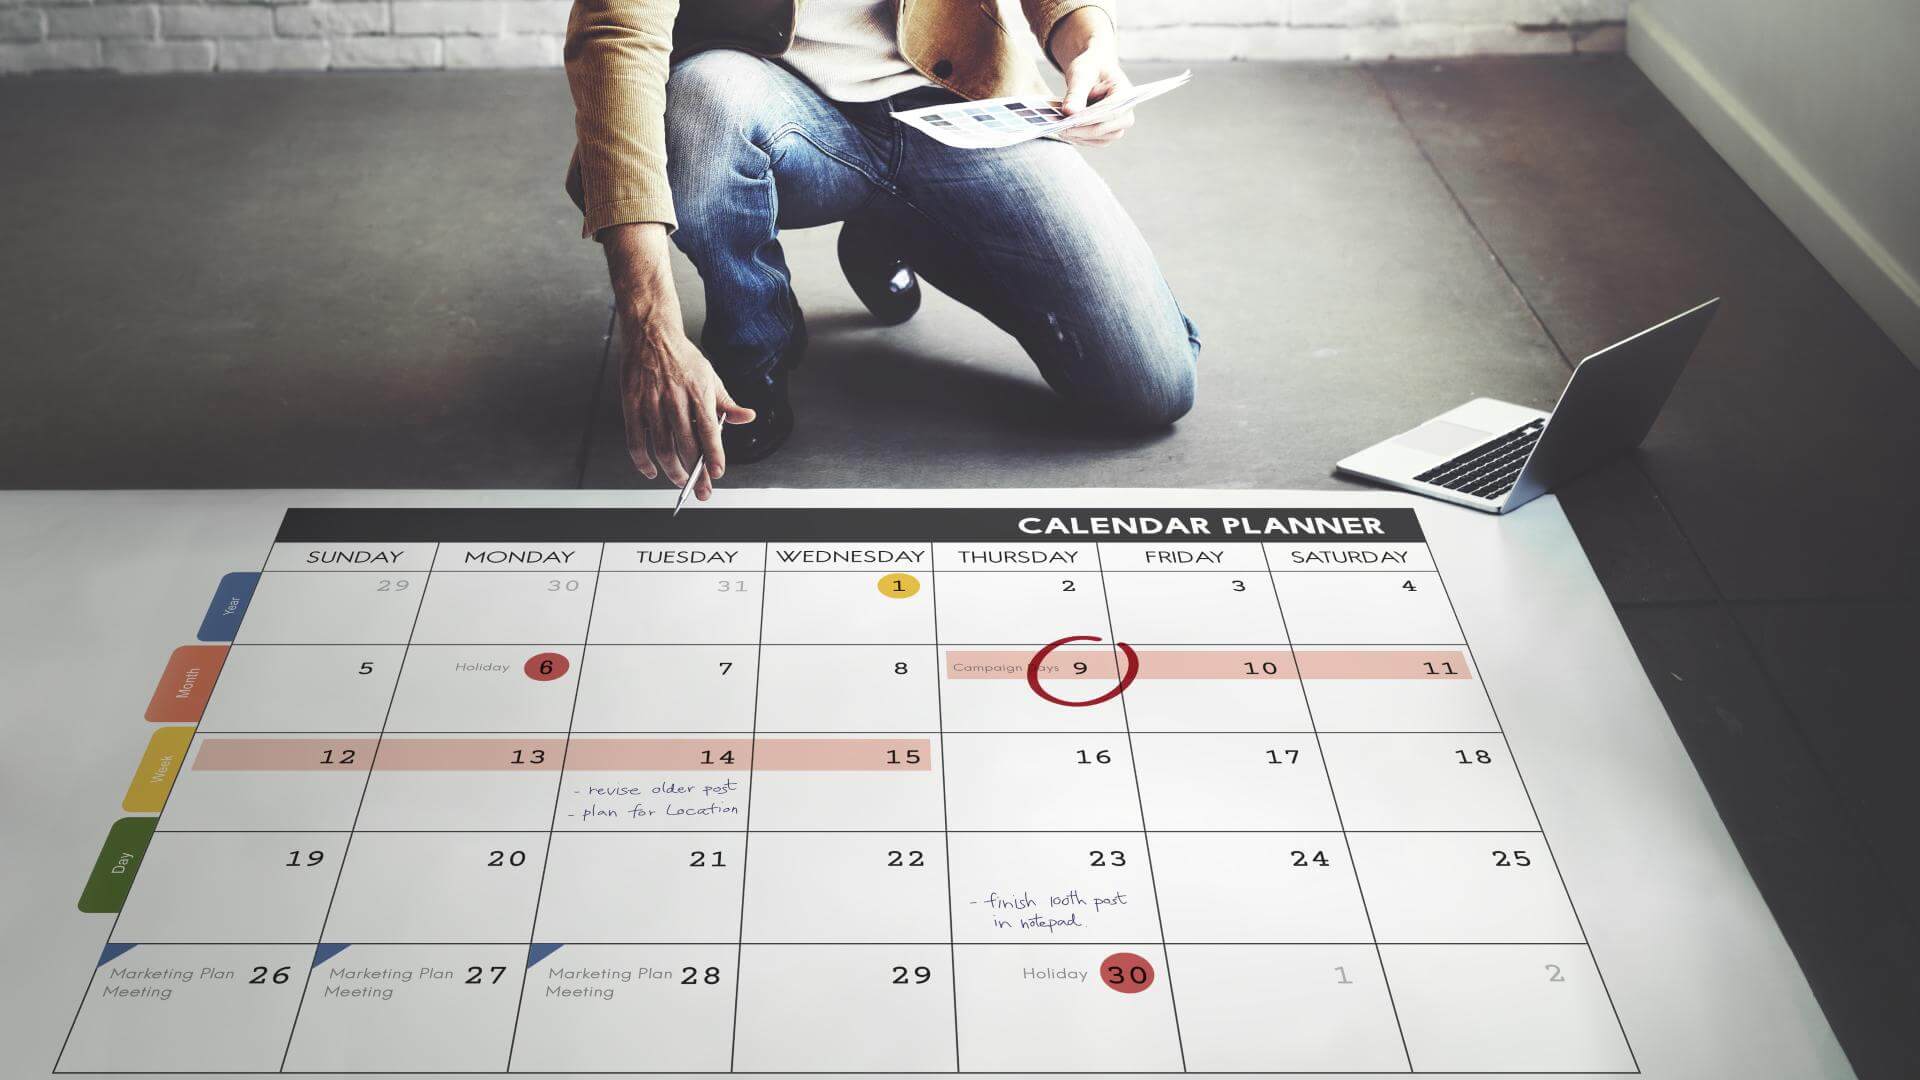 Large calendar on office floor planning ahead